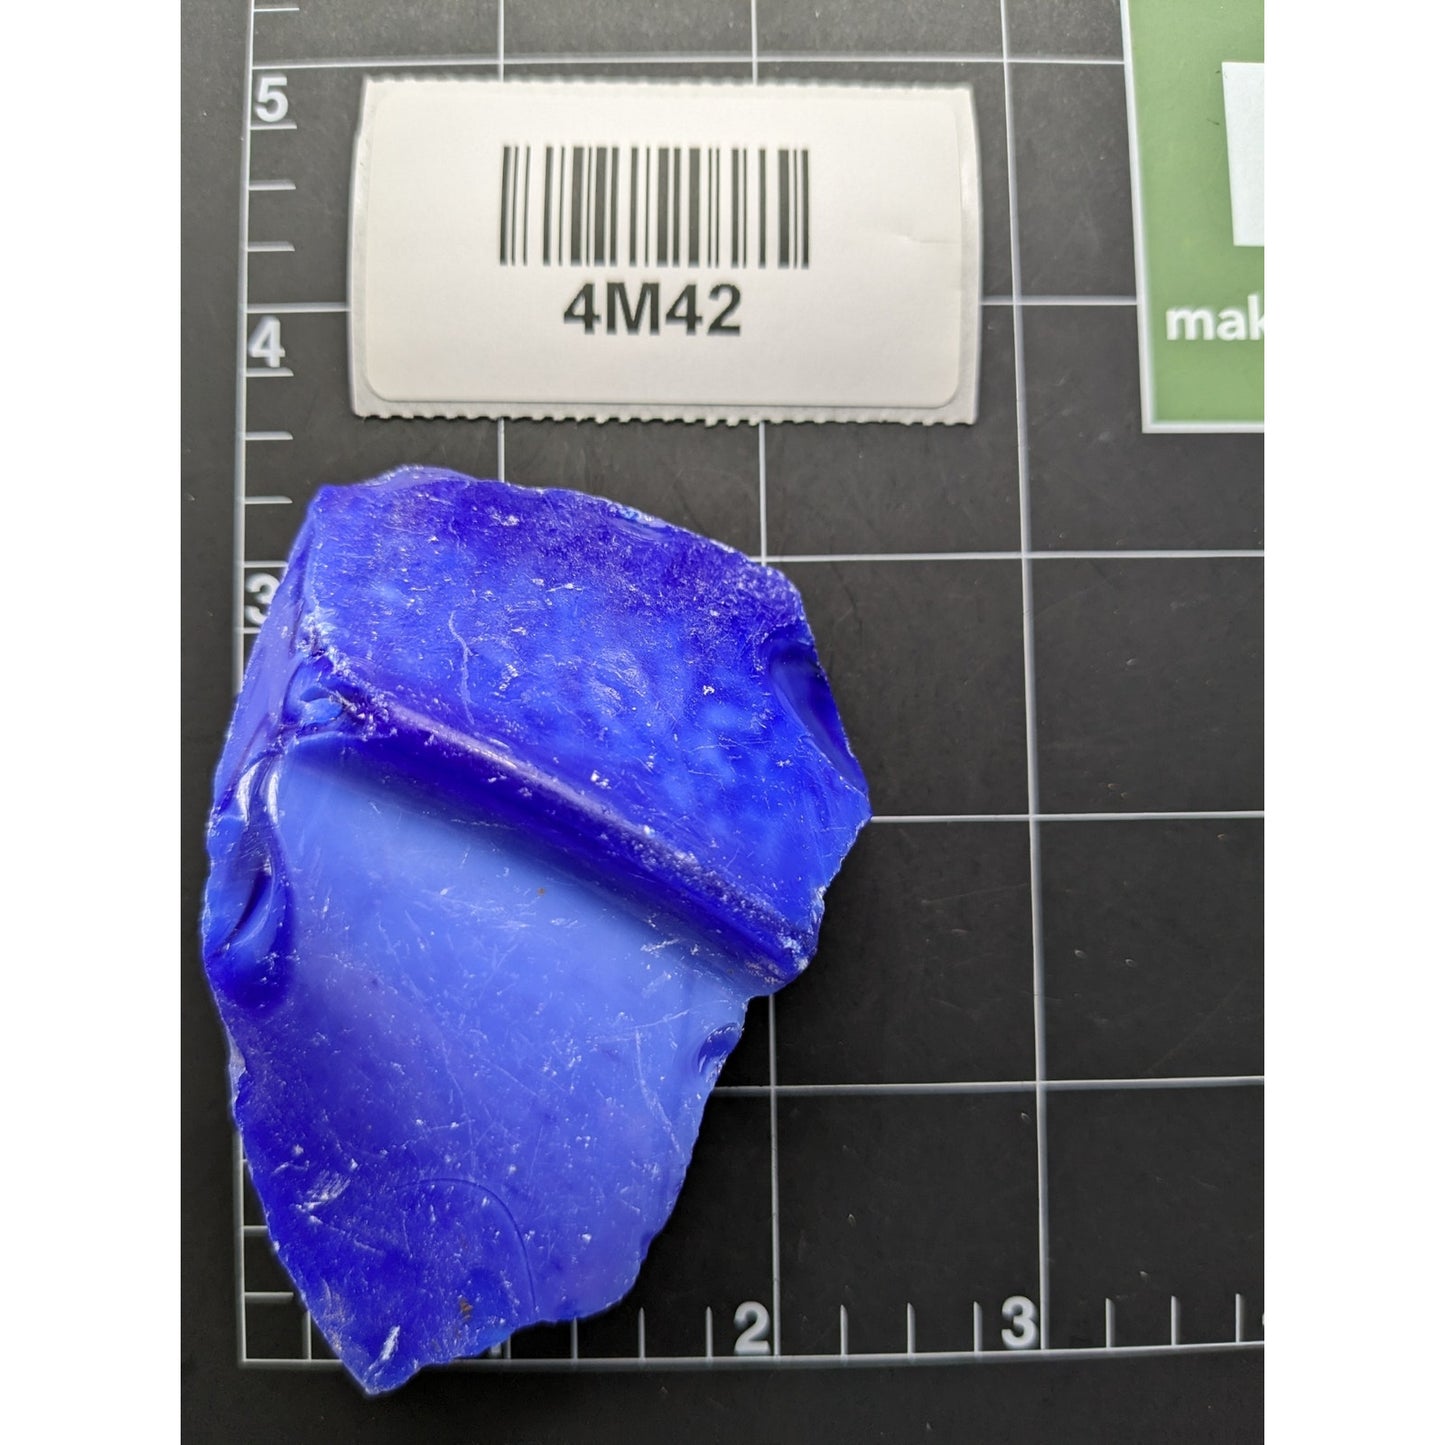 Periwinkle Cobalt Blue Swirl Slag Art Glass Cullet Opaque Slag Glass #4M42